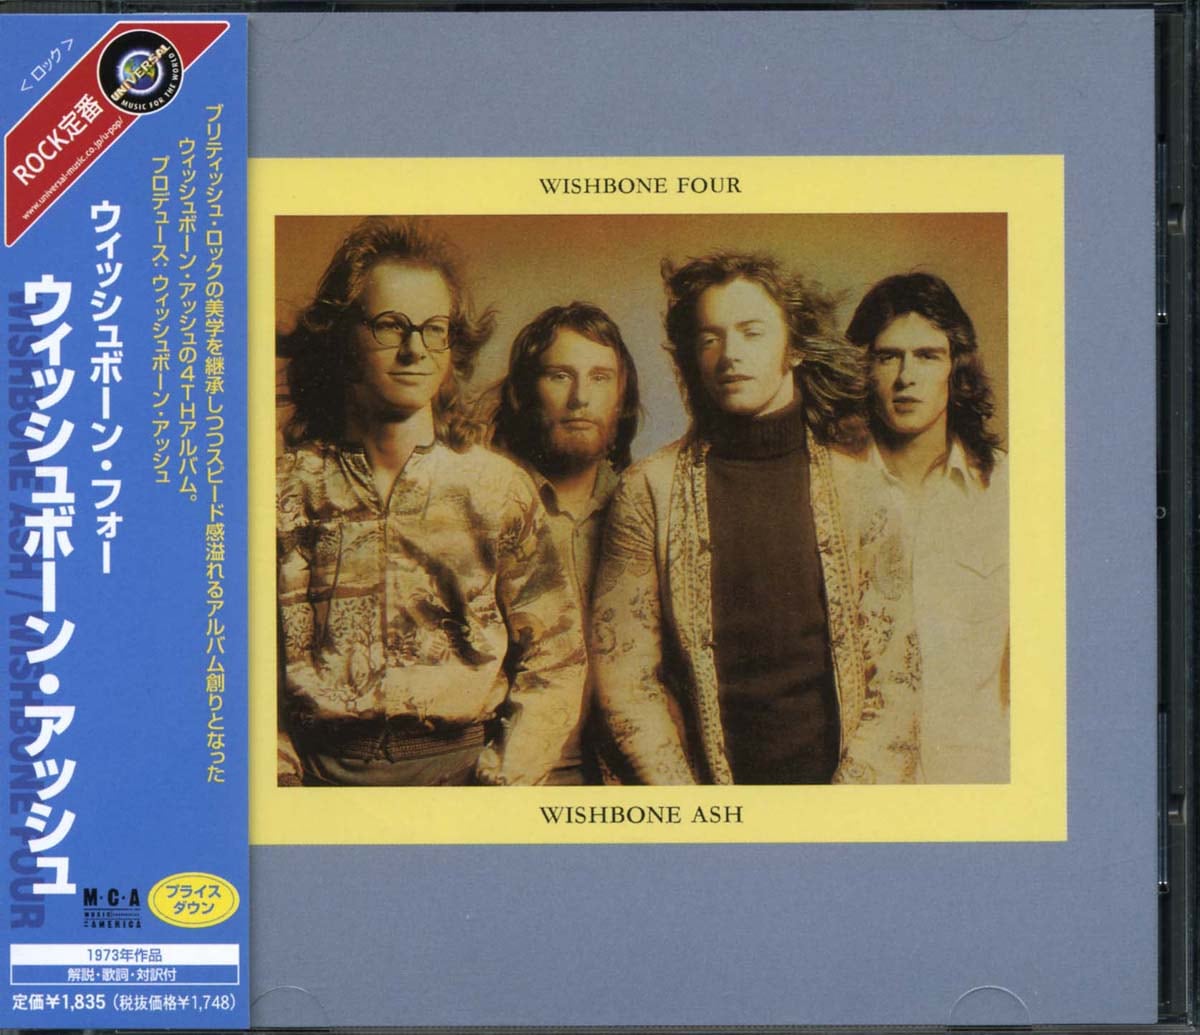 WISHBONE ASH - Wishbone Four [CD]